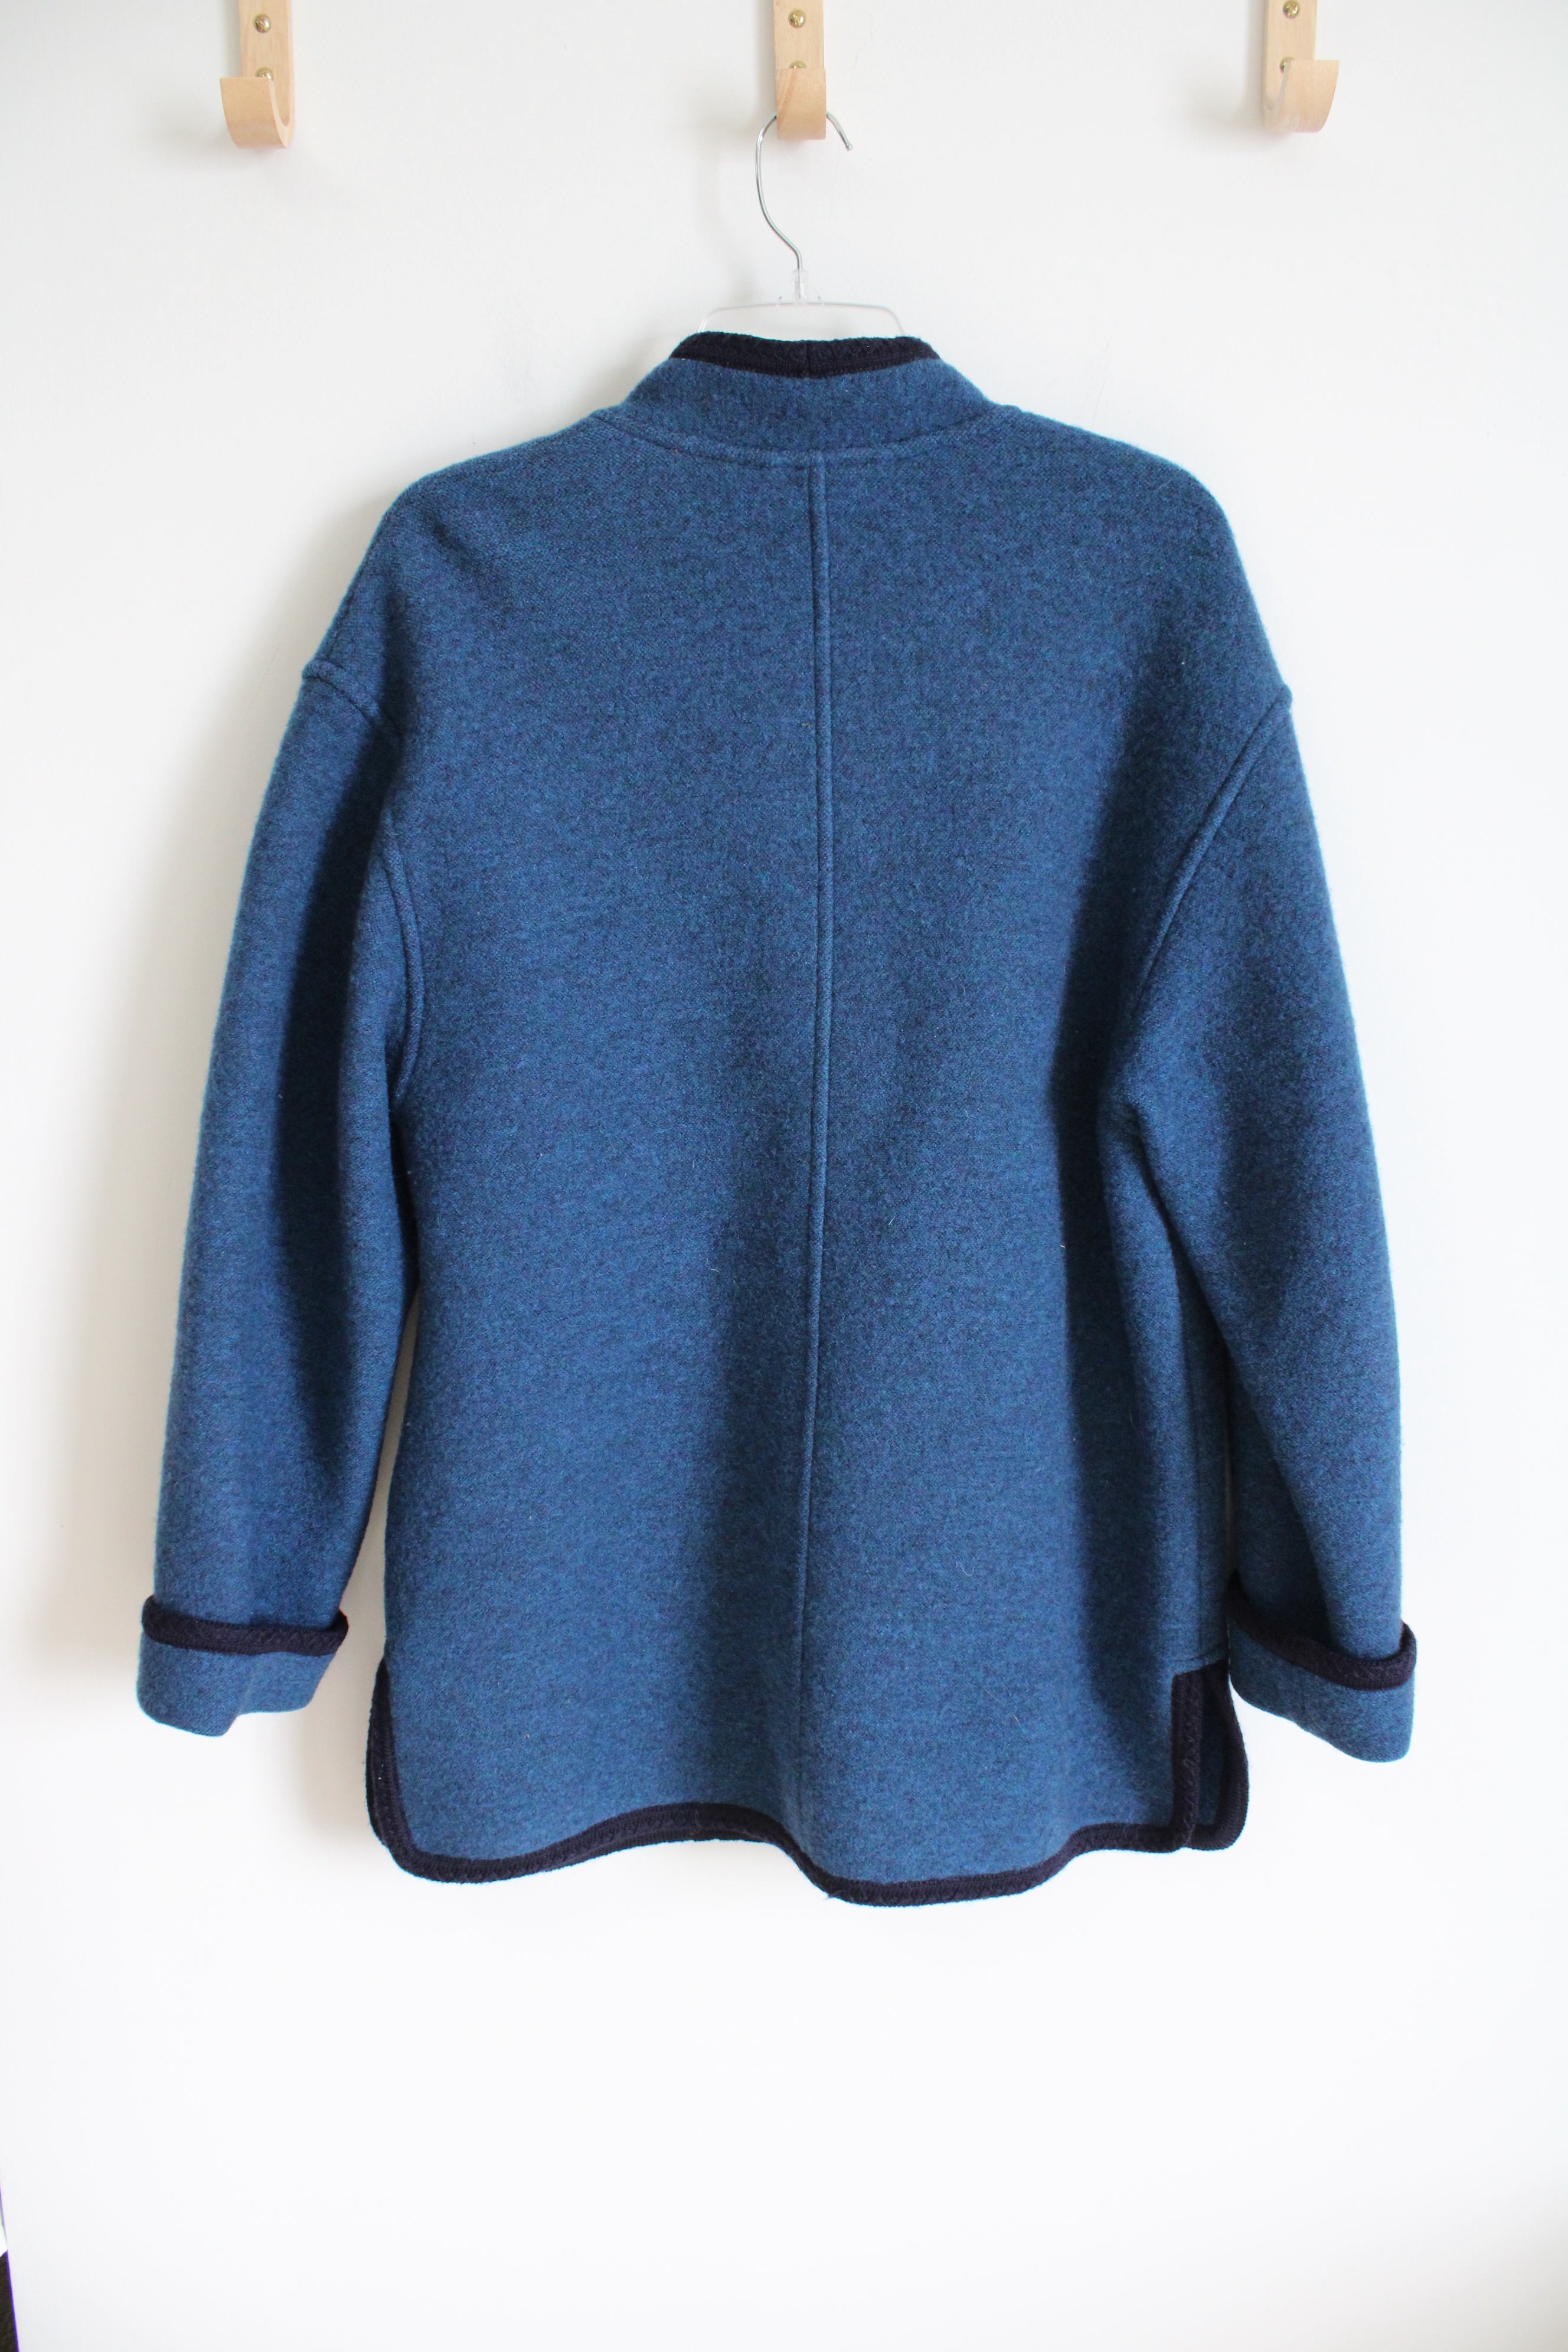 Geiger Collectors Blue Wool Jacket | 36